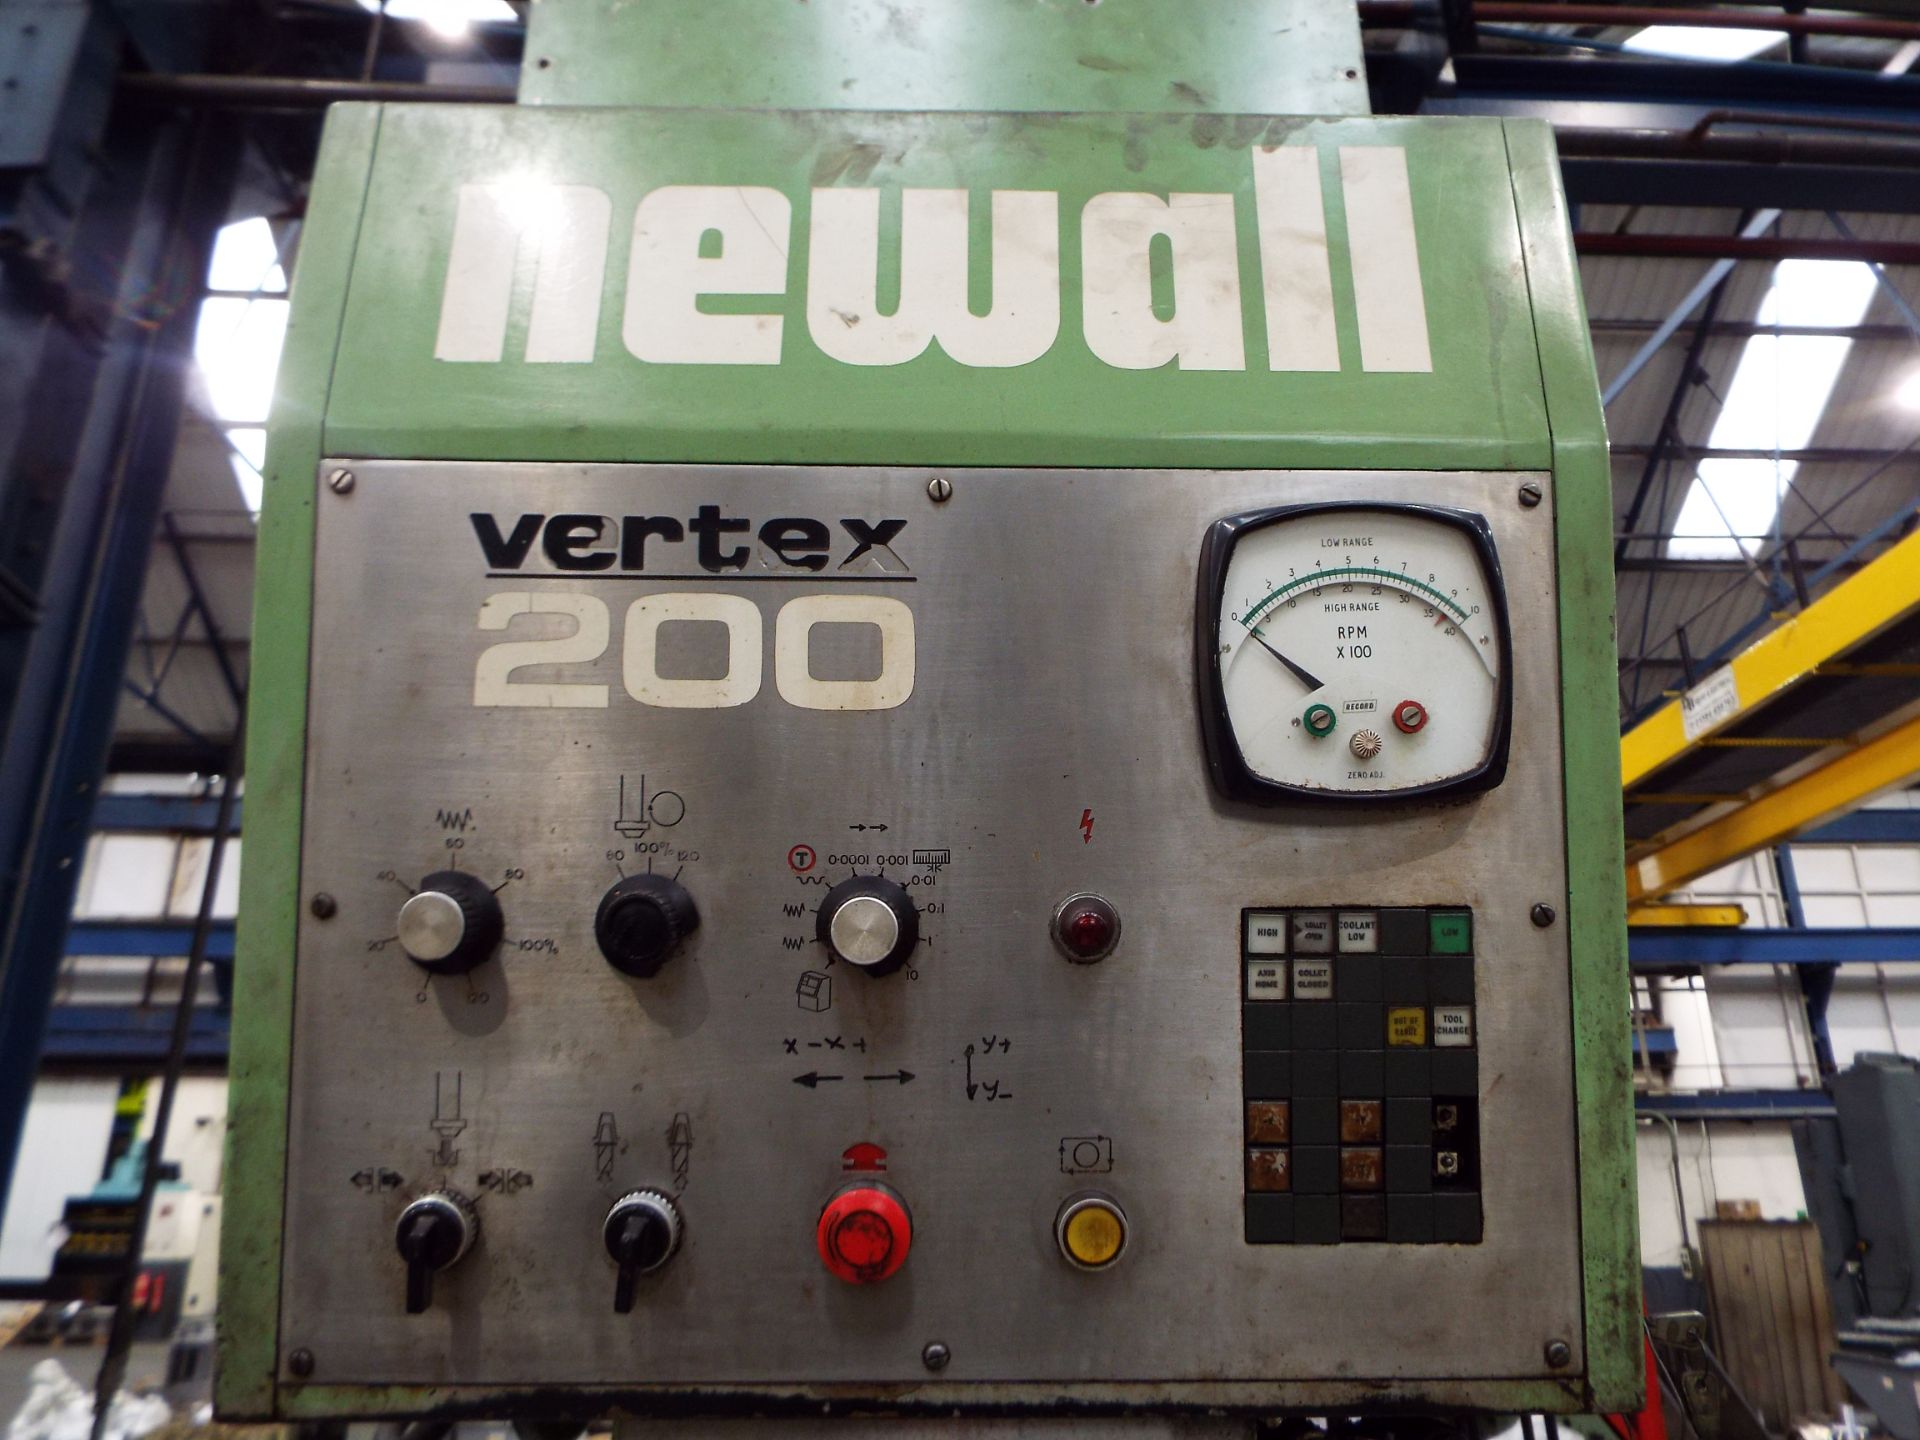 Newall Vertex 200 Jig Boring Machine cw Heidenhain TNC310 Control - Image 4 of 25